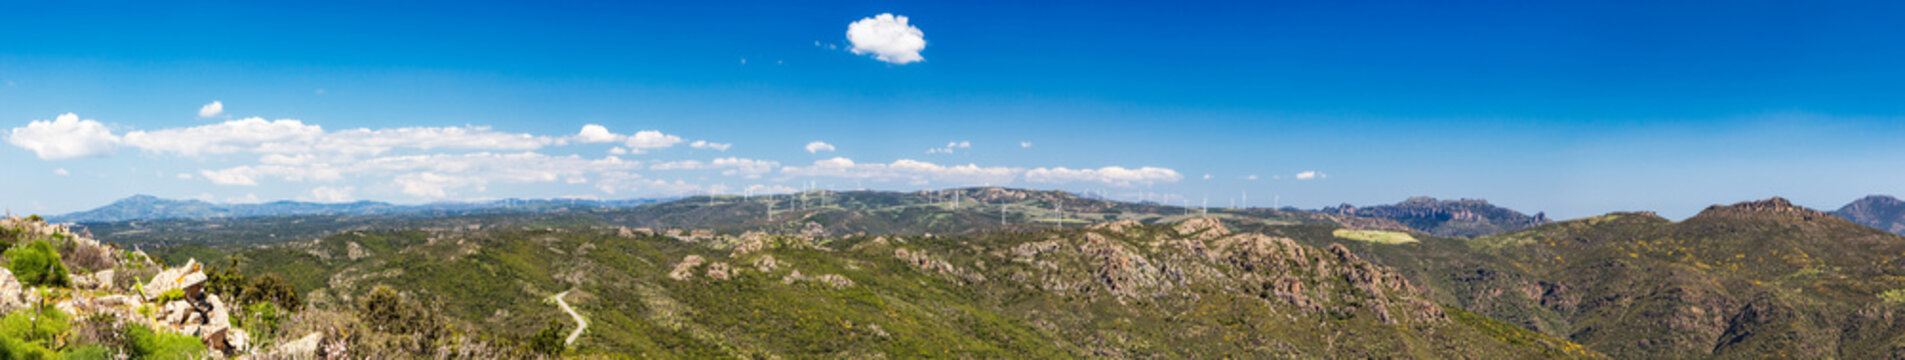 Wind Energy in Sardinian Mountains (panoramic)